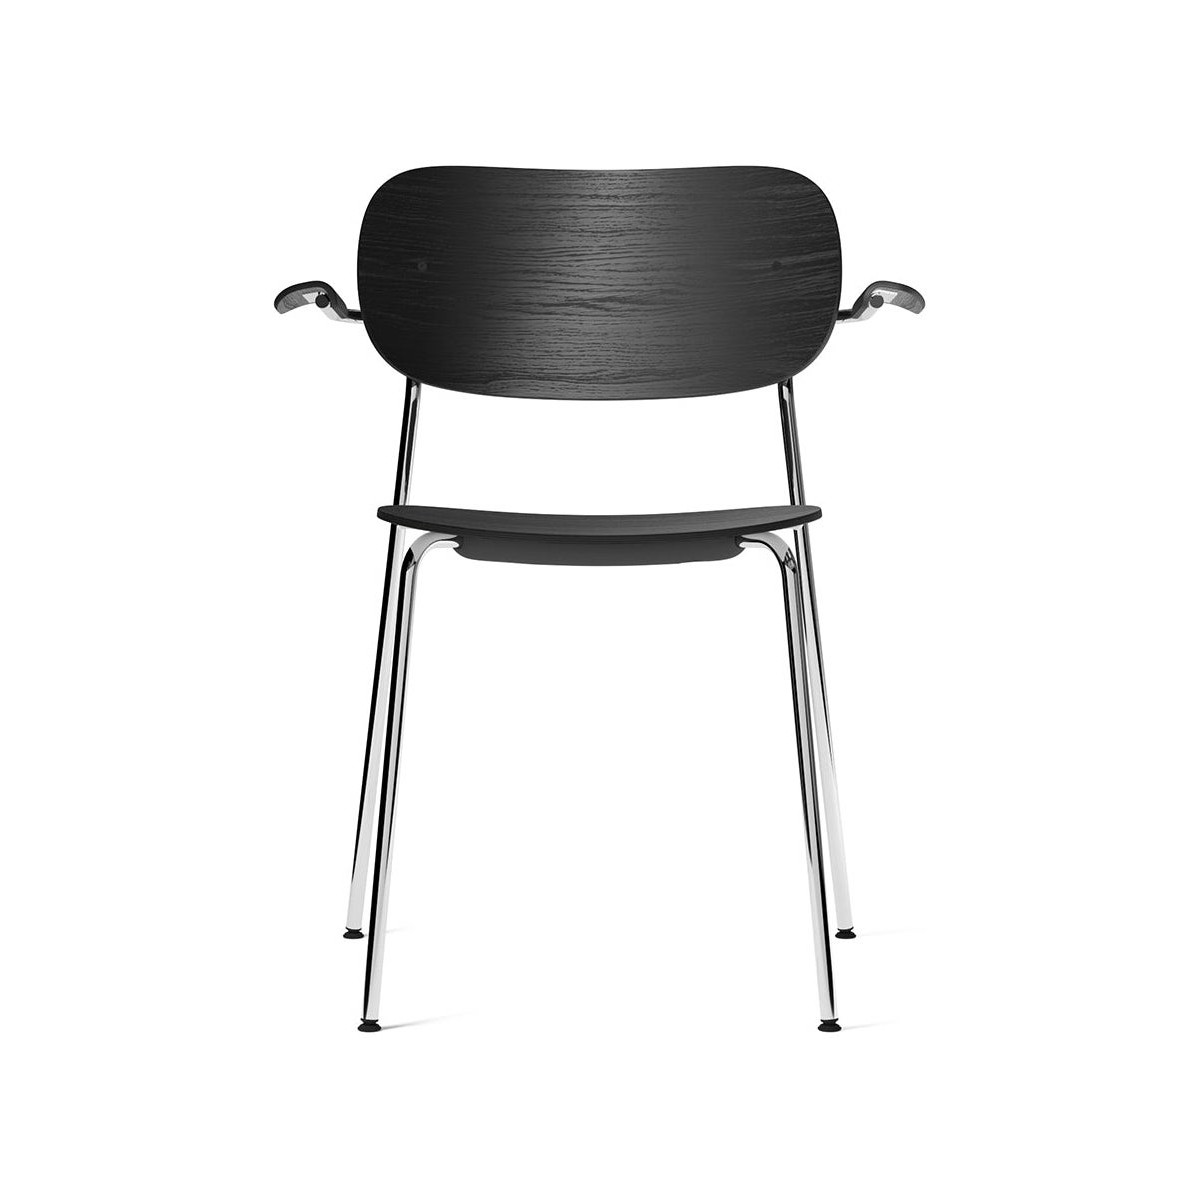 with armrests - black oak / chrome frame - Co chair